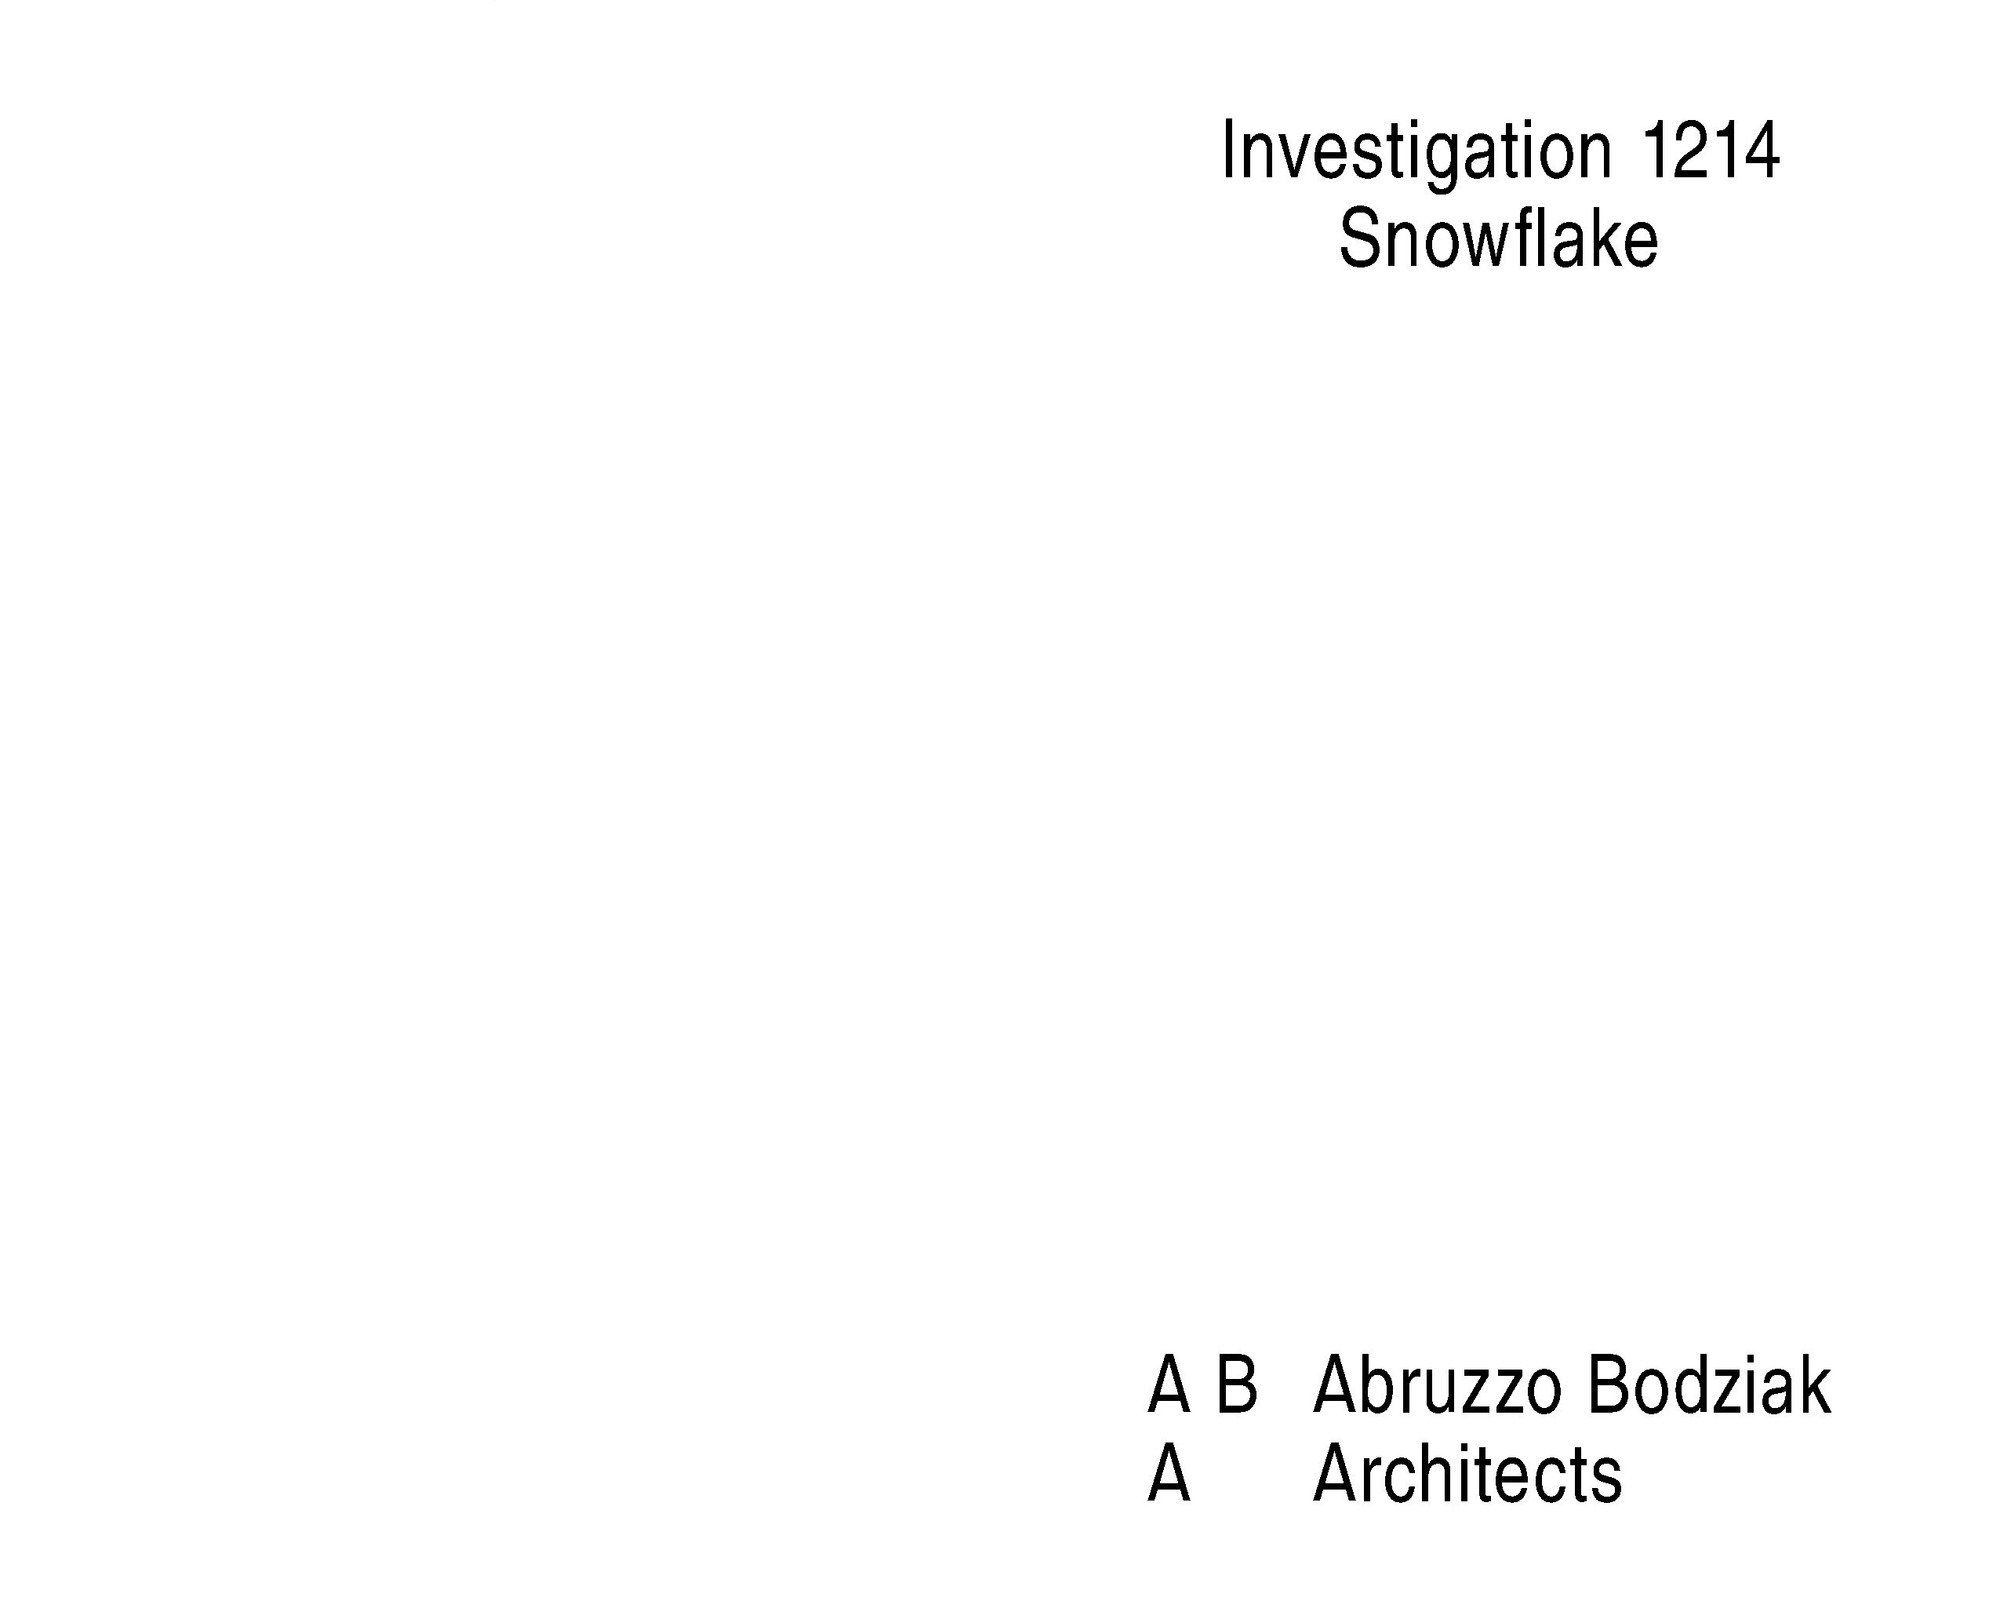 1214 snowflake investigation page 02 2000 xxx q85